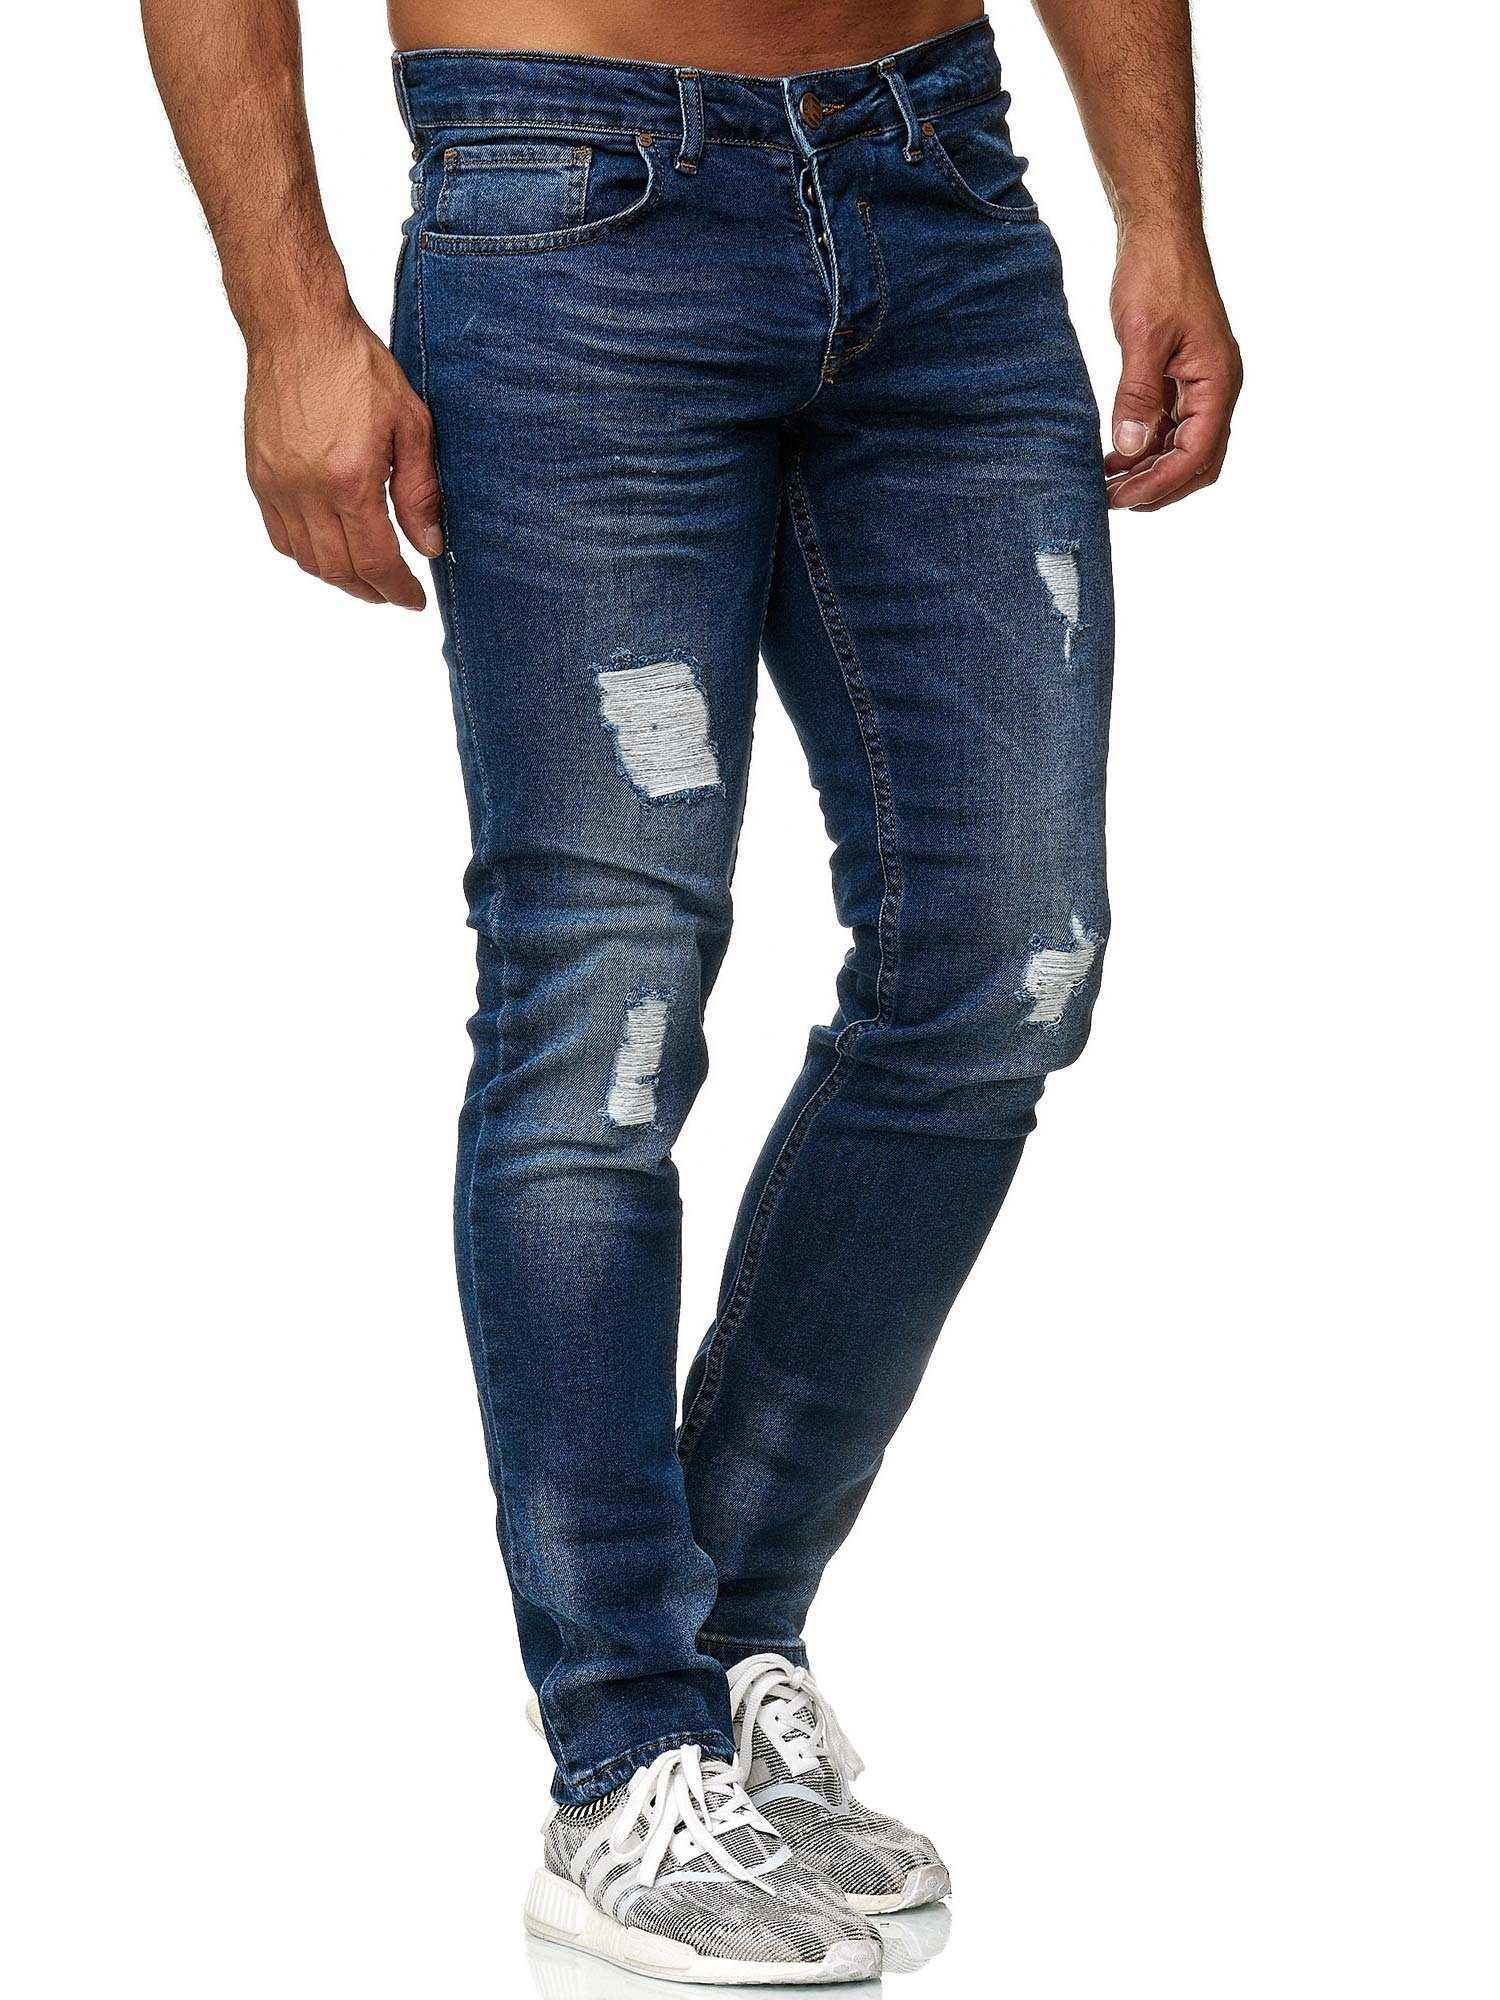 Tazzio Slim-fit-Jeans 16525 Stretch mit Elasthan & im Destroyed-Look blau